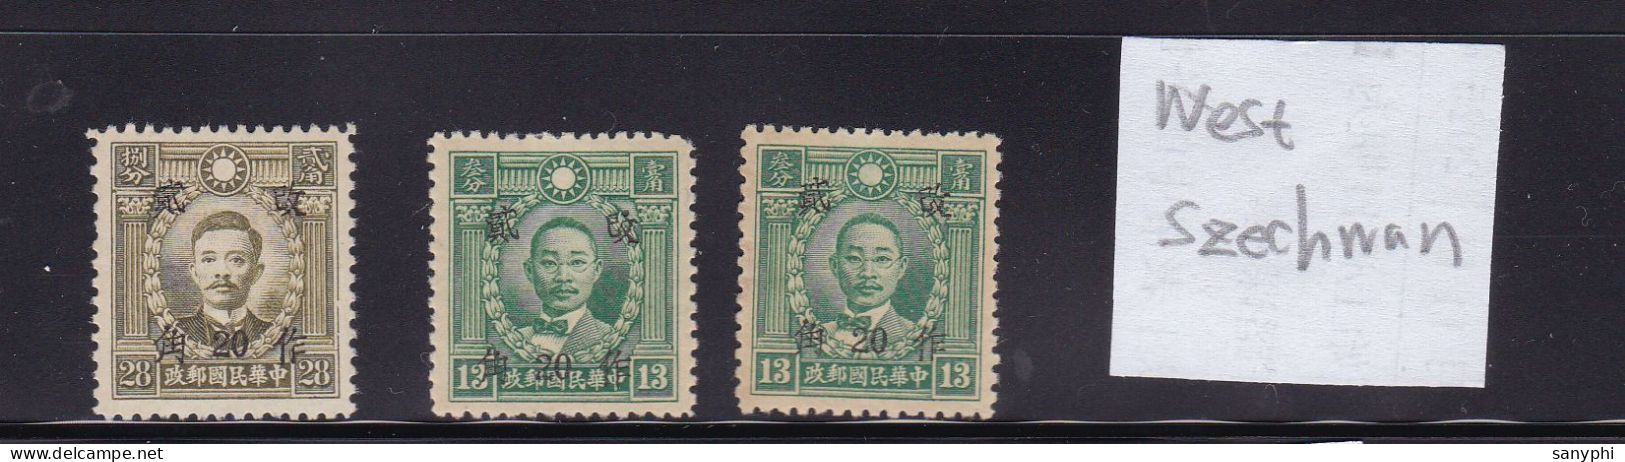 China Republic Martyt Provincial Ovpts 3 Unused Stamps-West Szechwan - 1912-1949 Republiek